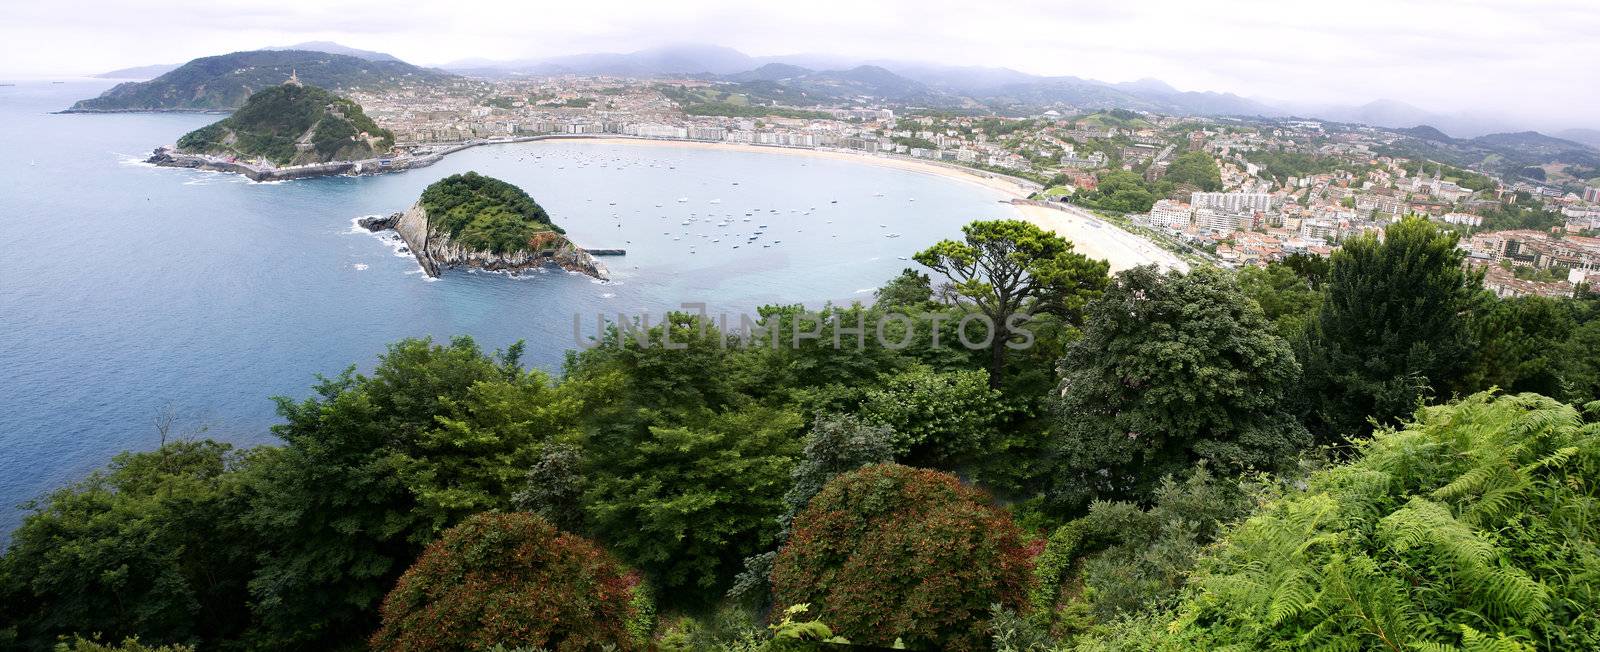 Bird view of San Sebanstian city and sea from Igueldo